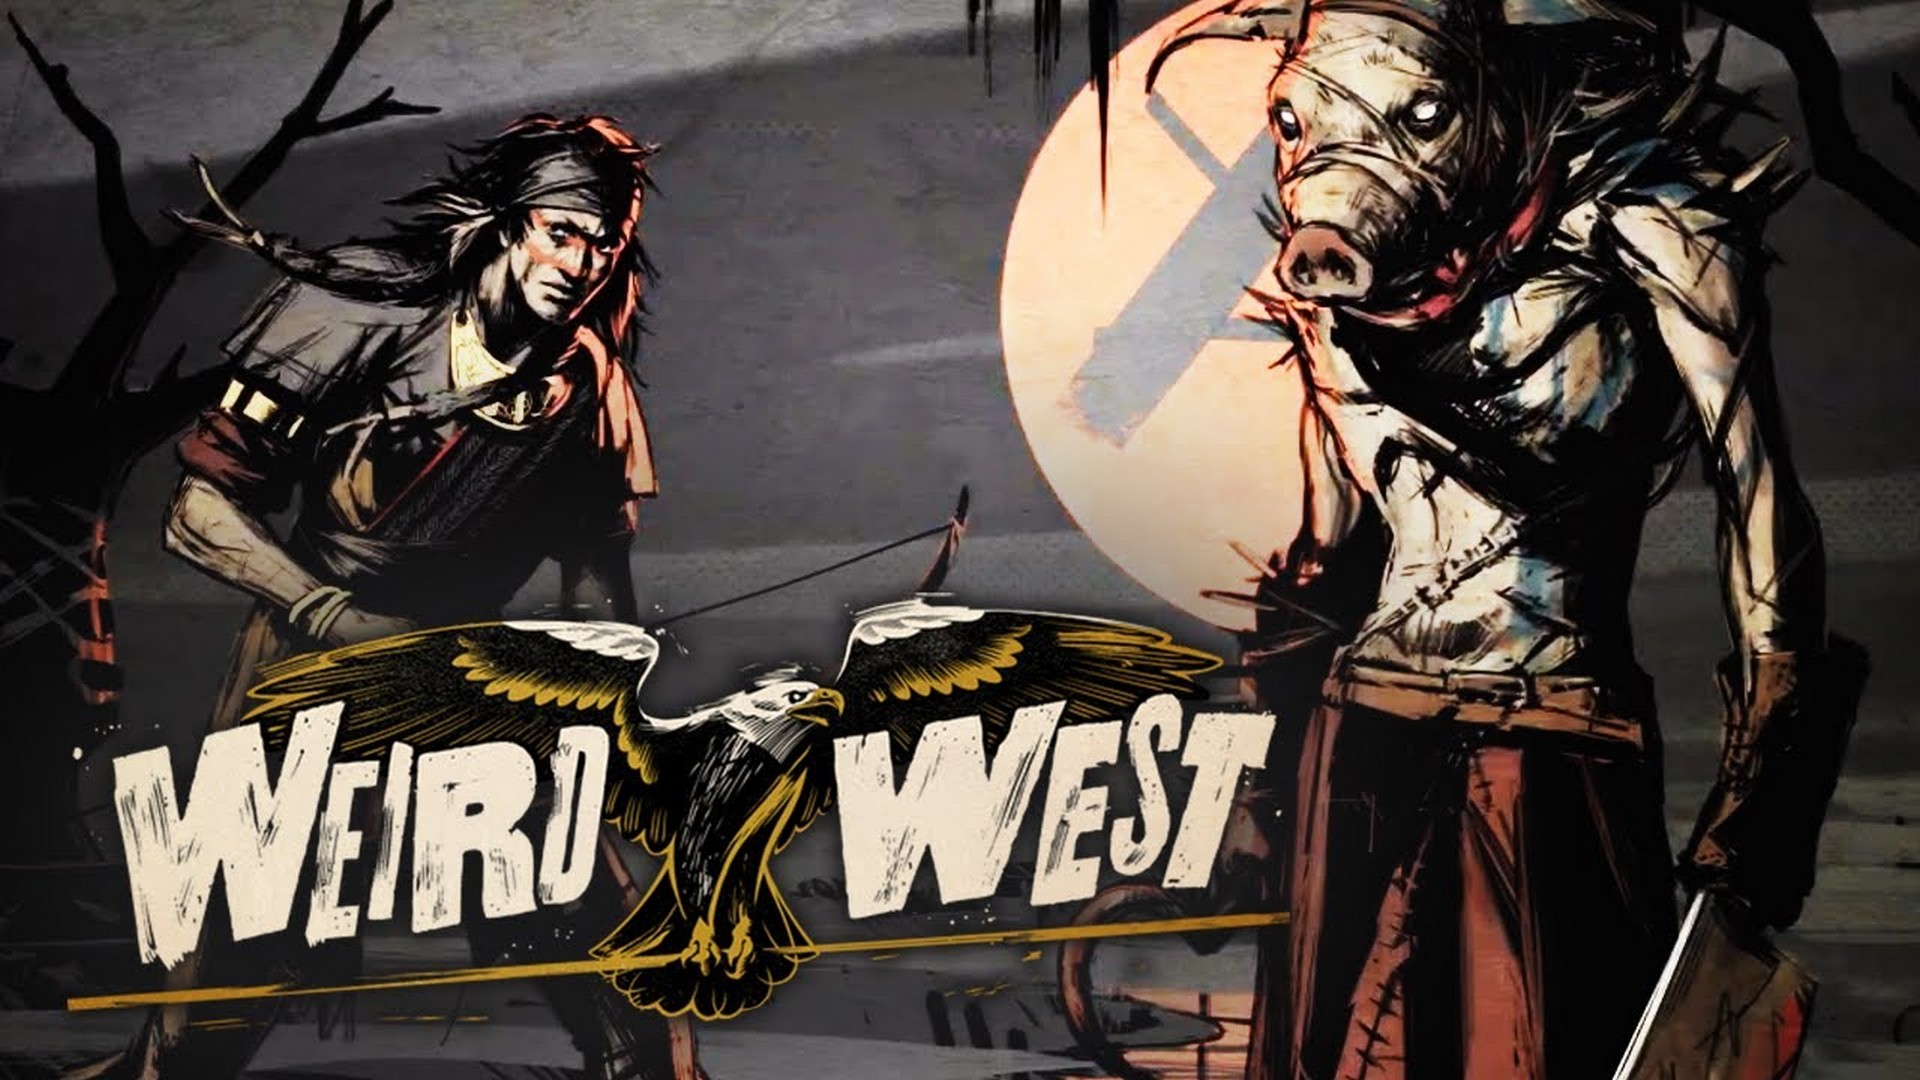 Weird West – Road to Weird West: Episode 2